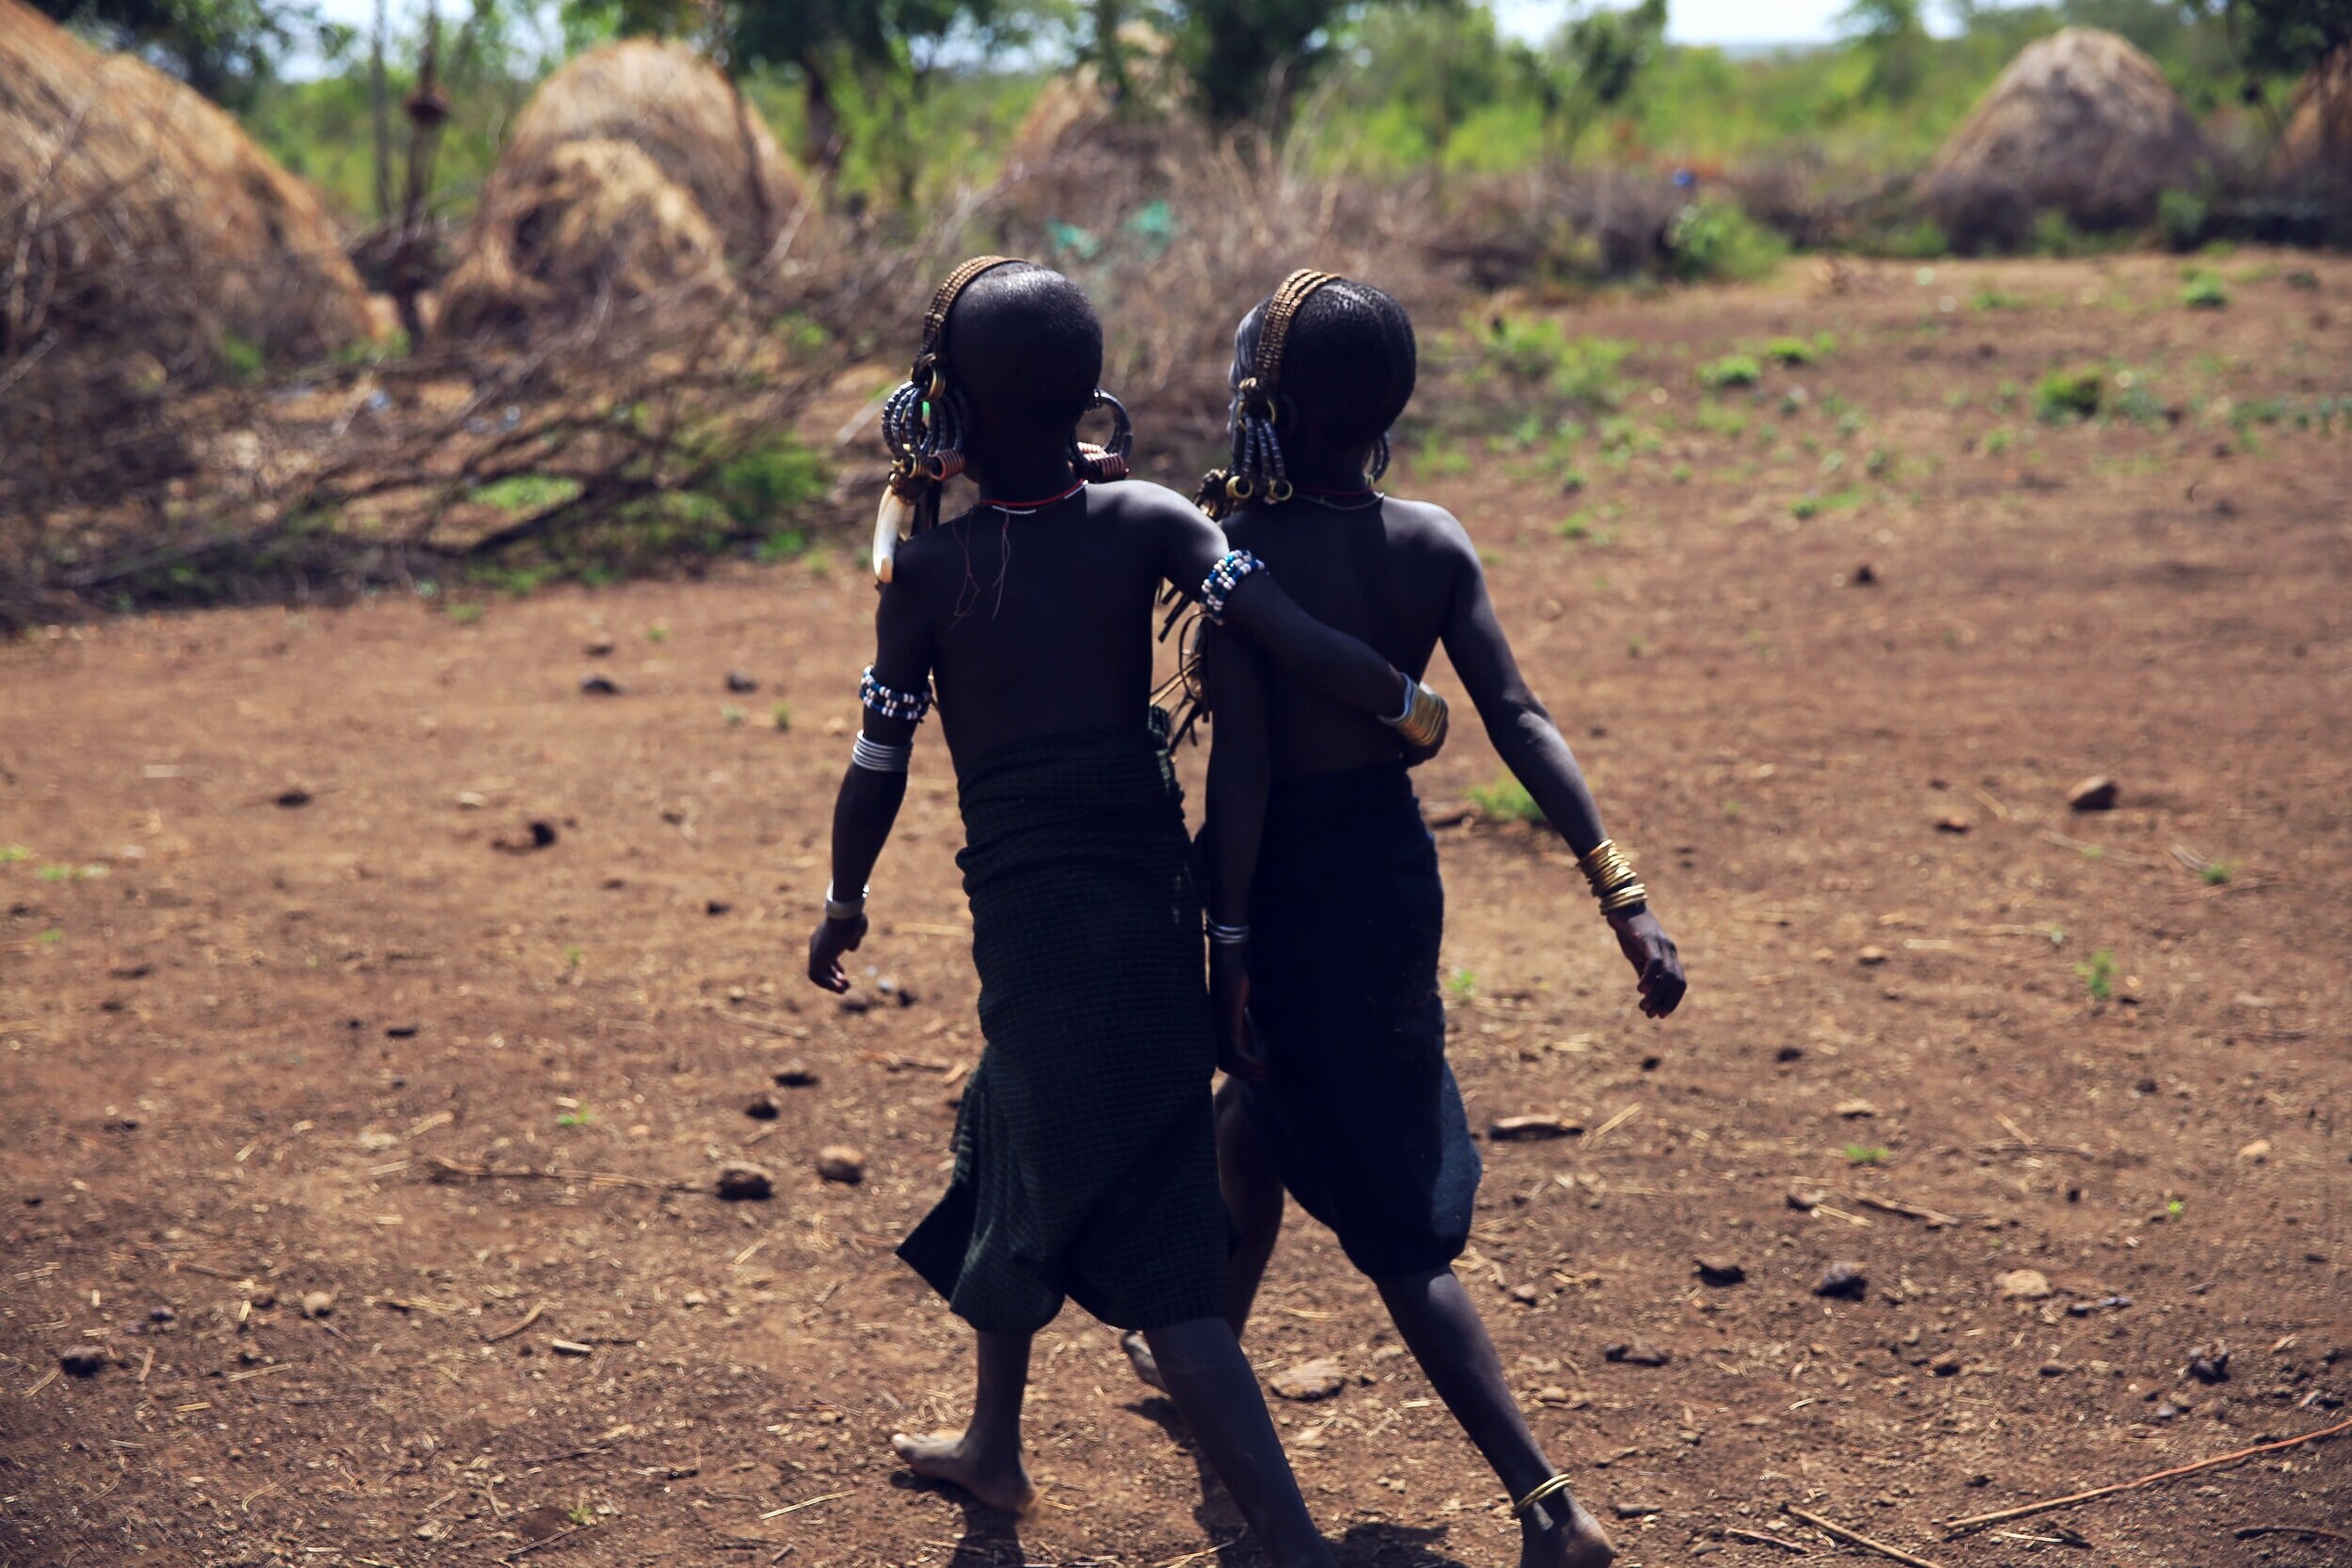  Mursi boys walk arm in arm  Southern Territories, Ethiopia 